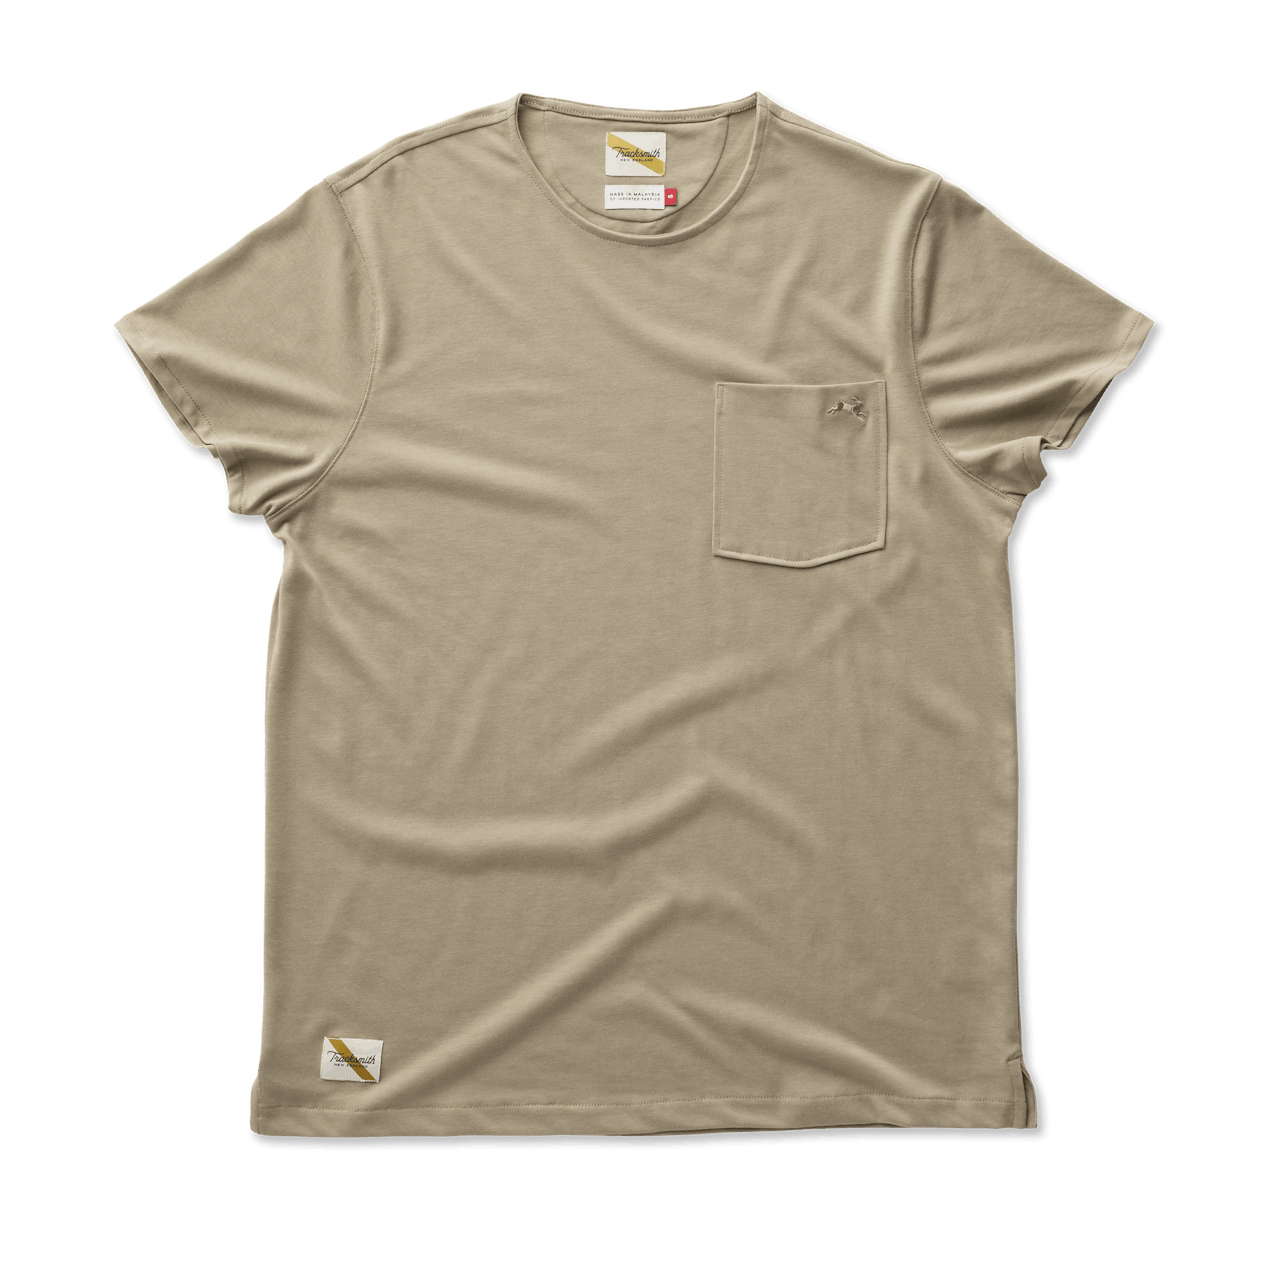 Fall Guys T-Shirt (Pocket Wave) M